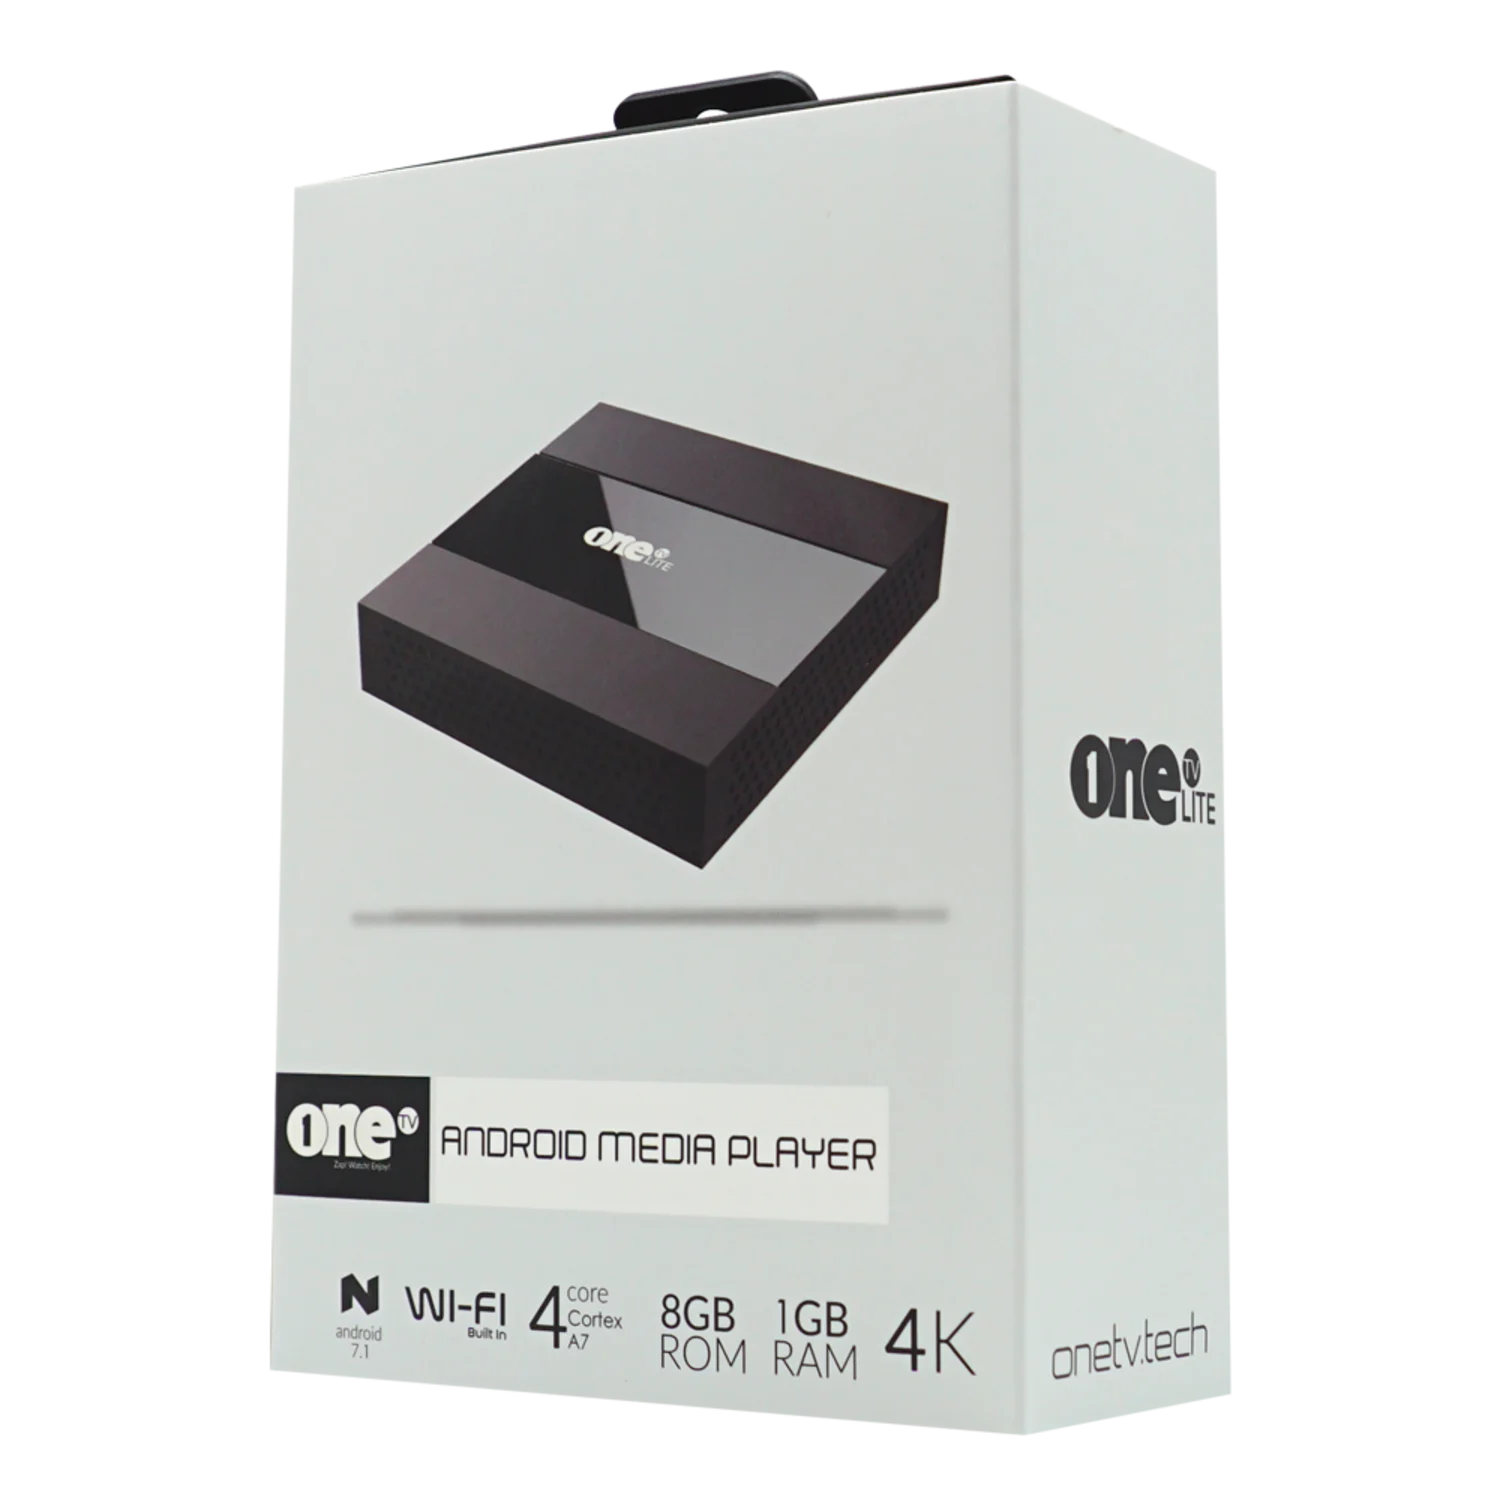 Receptor OneTV Lite 8GB / 4K / WiFi / Android 7.1 / IPTV / VOD - Preto